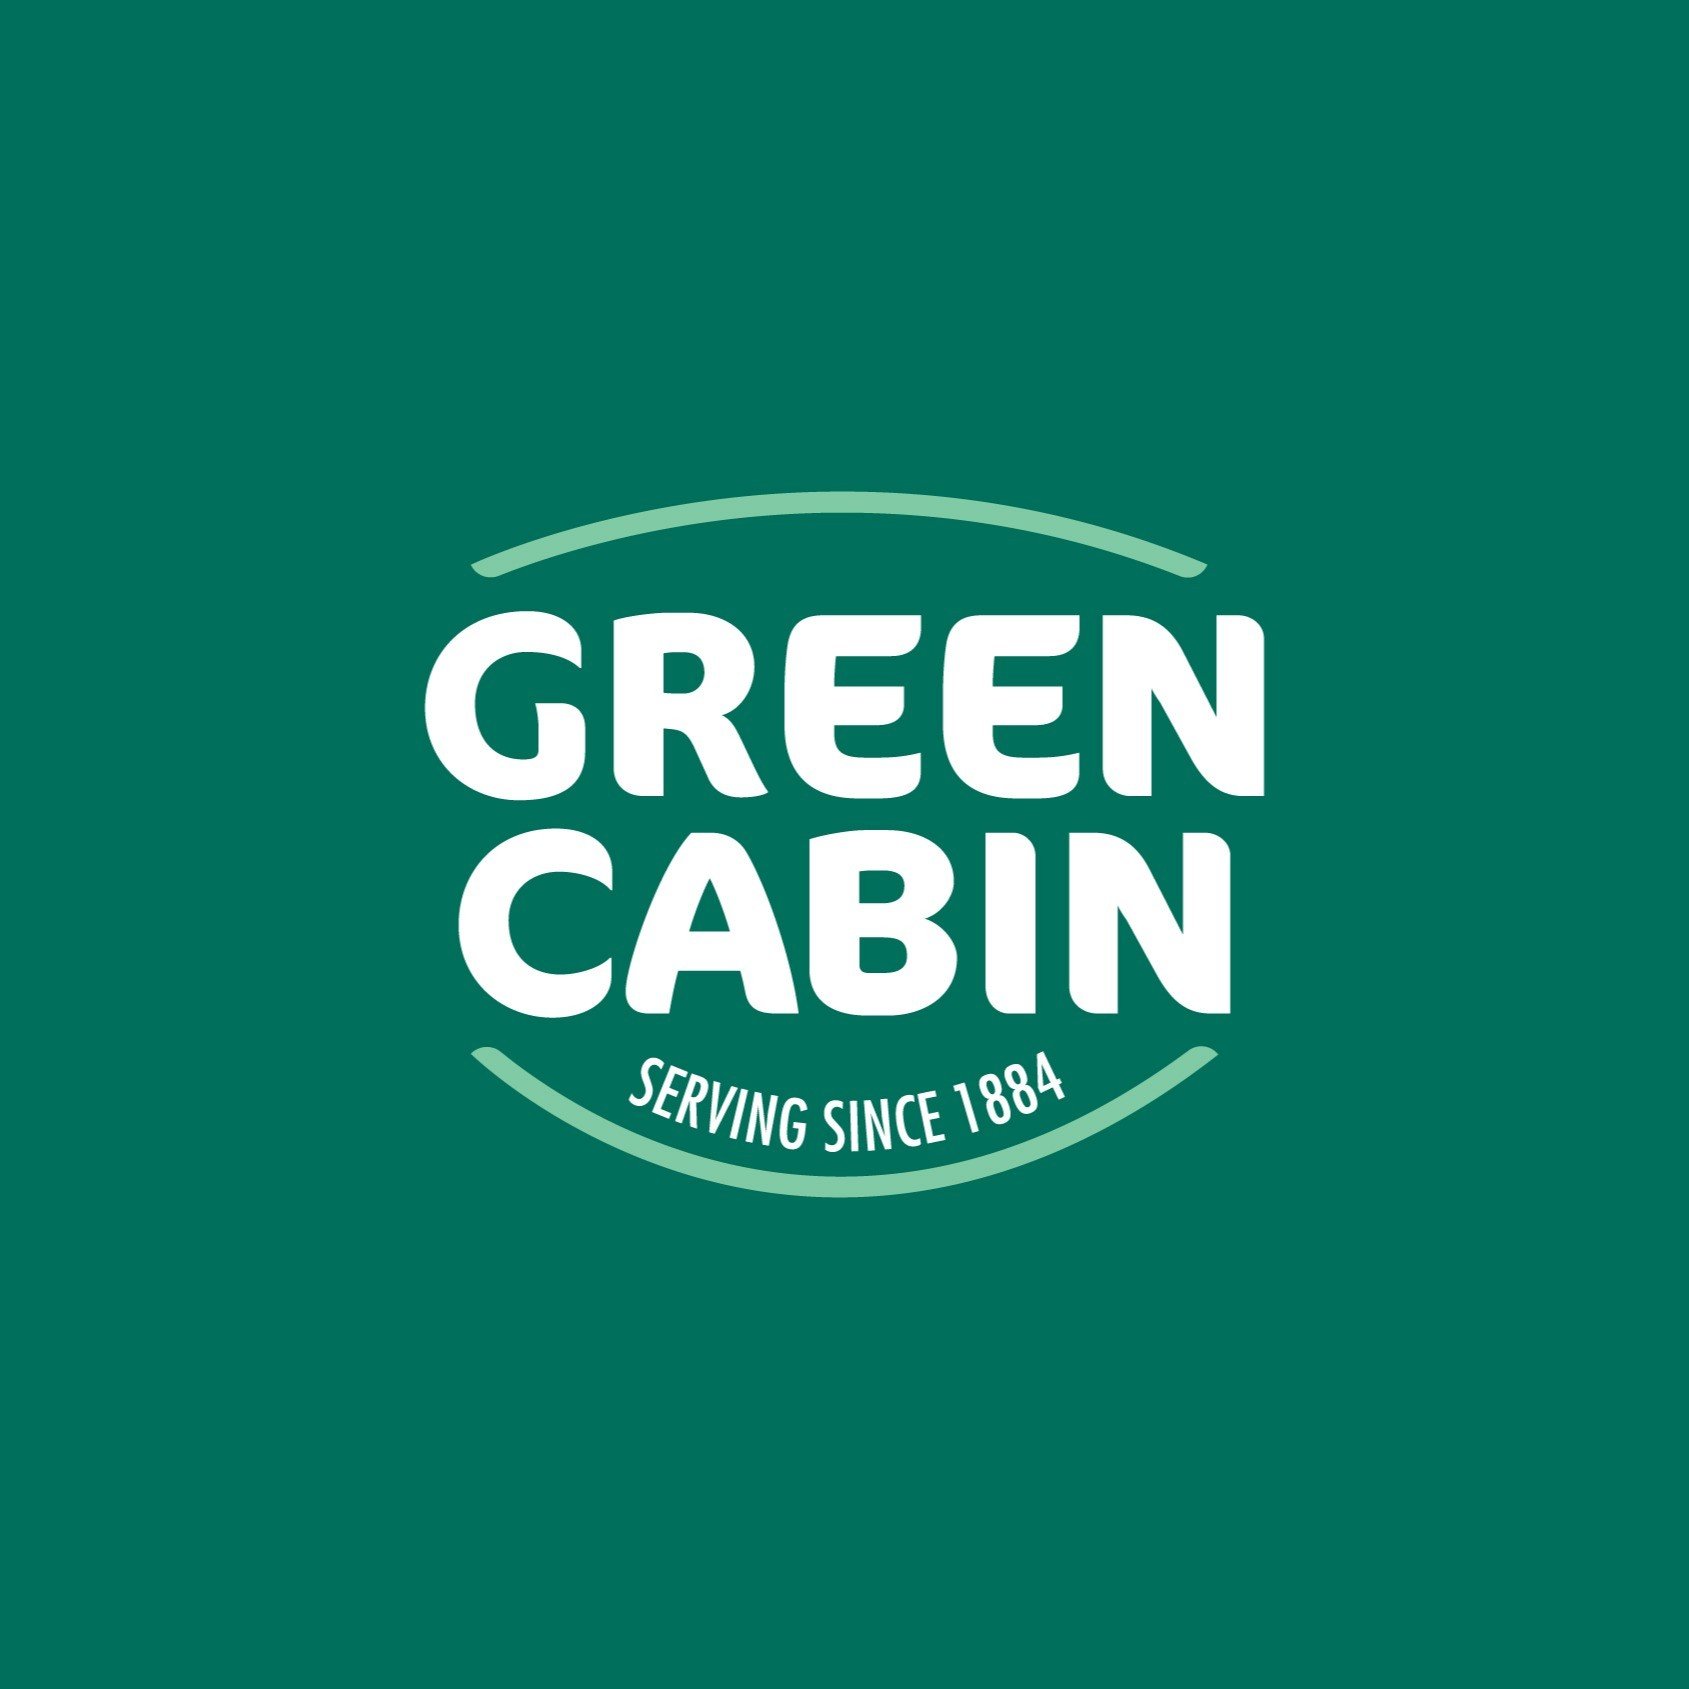 Green Cabin online sale listings at Kapruka